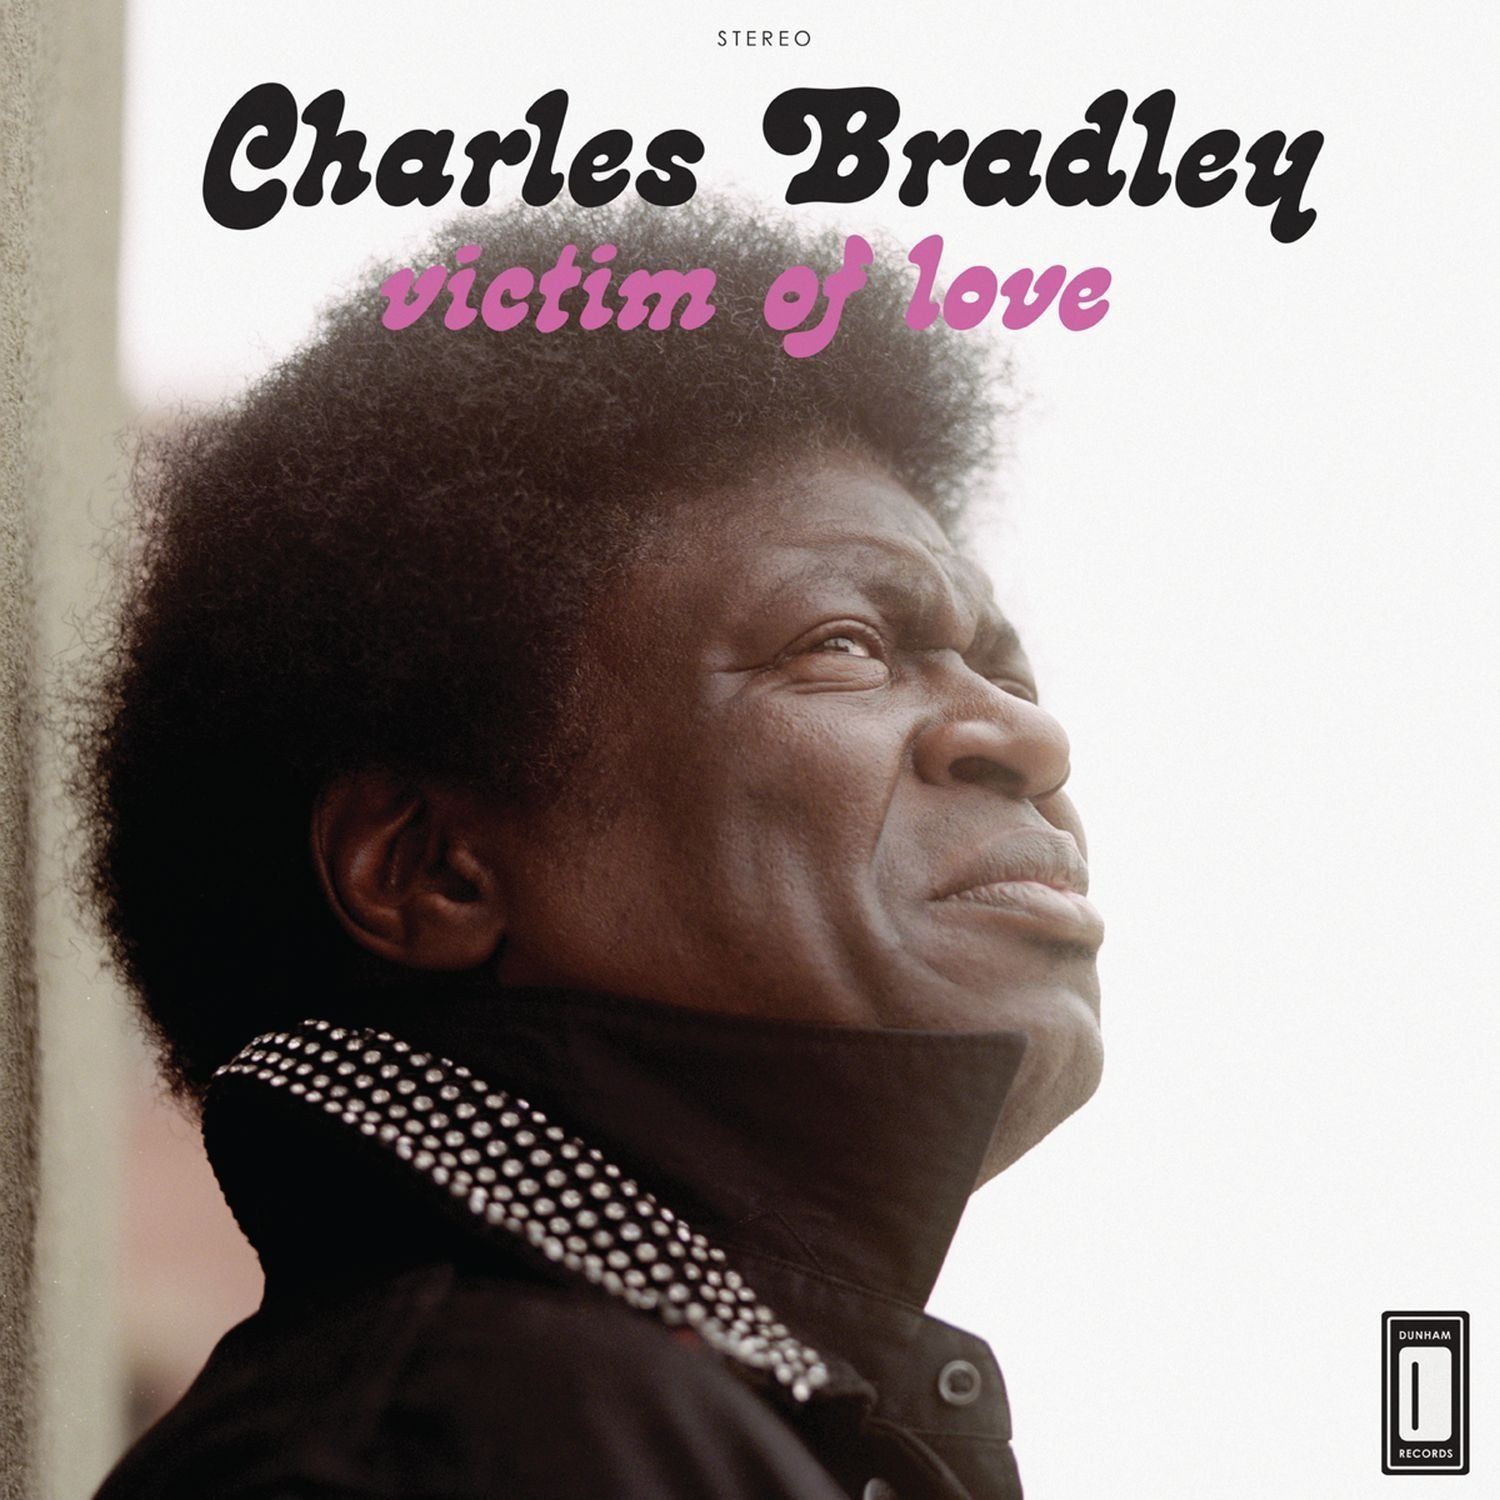 Music Monday: Charles Bradley